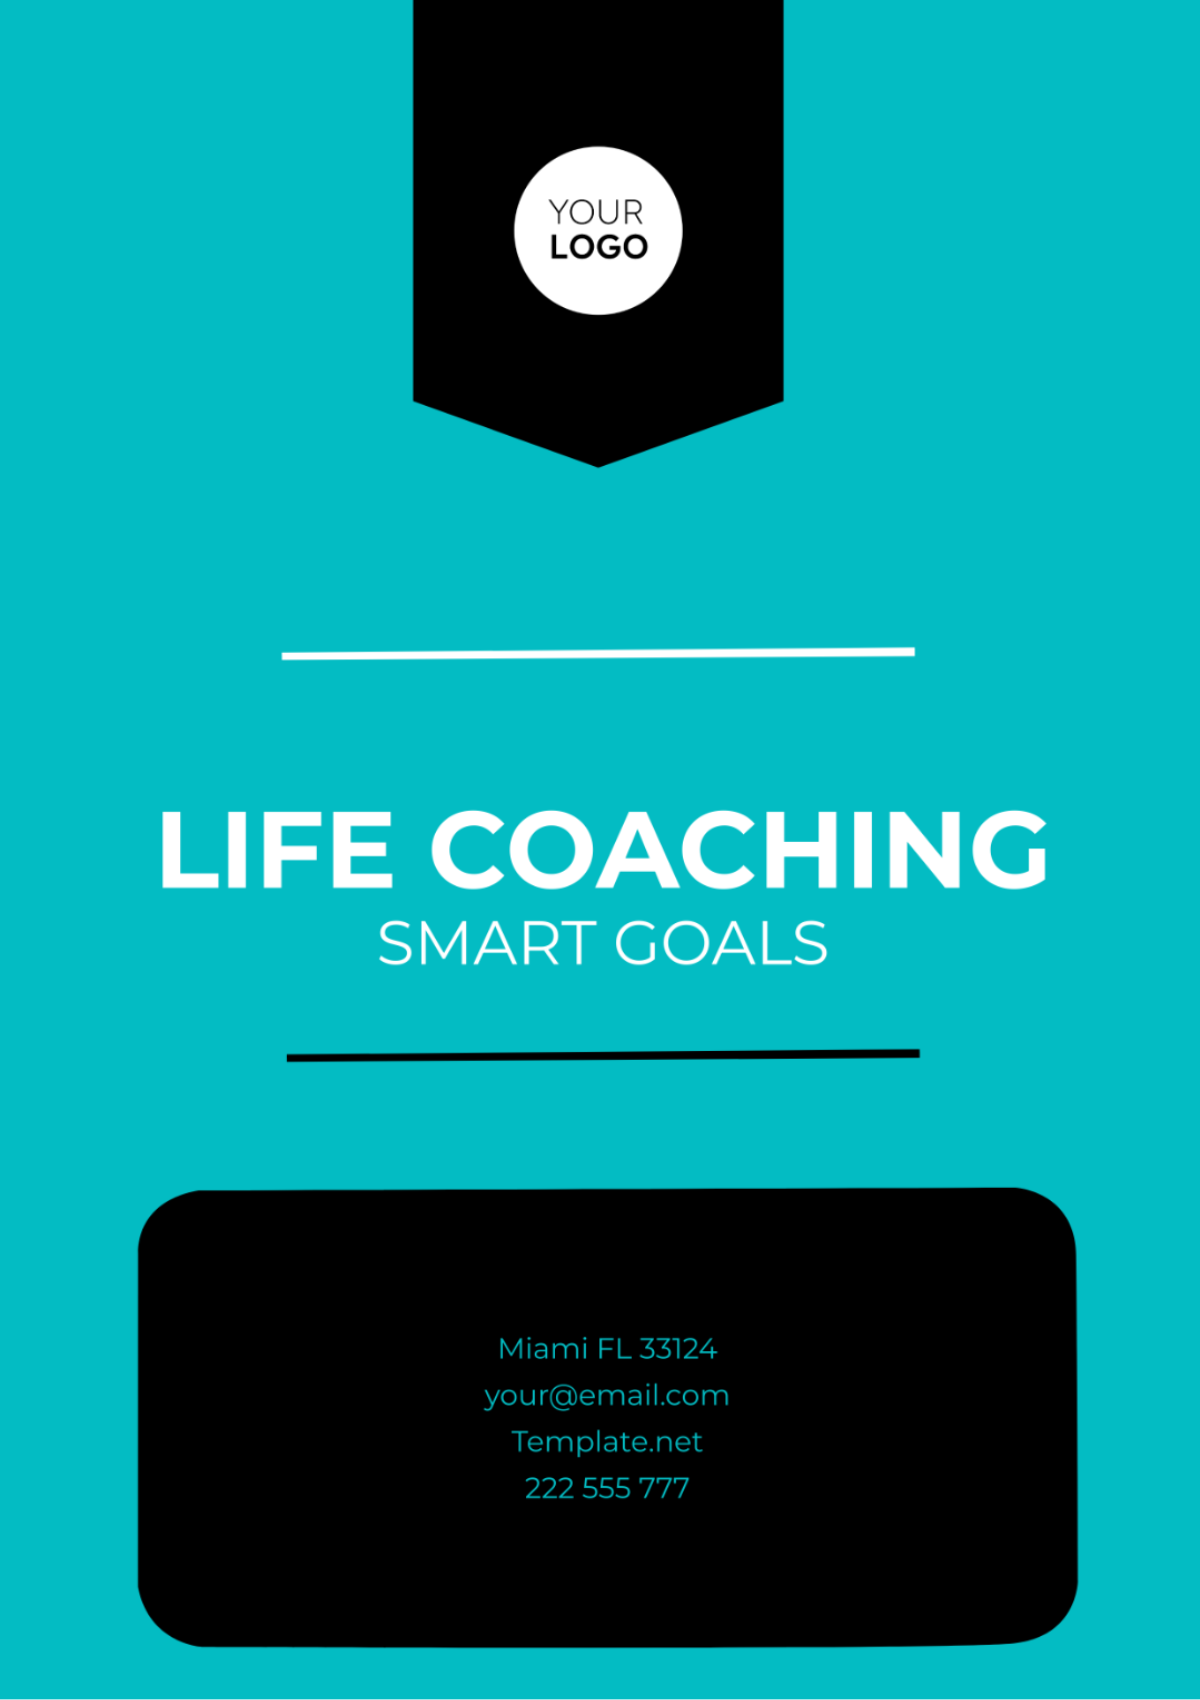 Life Coaching SMART Goals Template